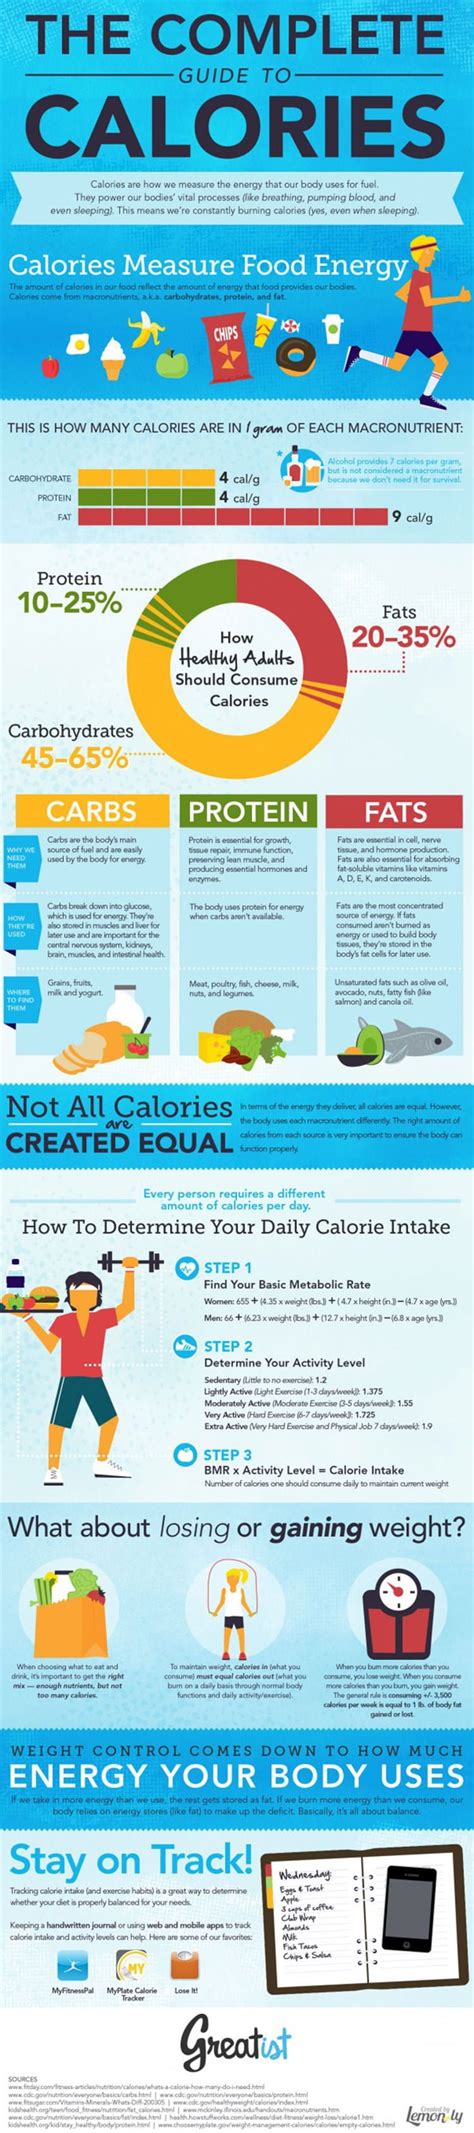 Daily Calorie Intake Calculator | AHealthBlog